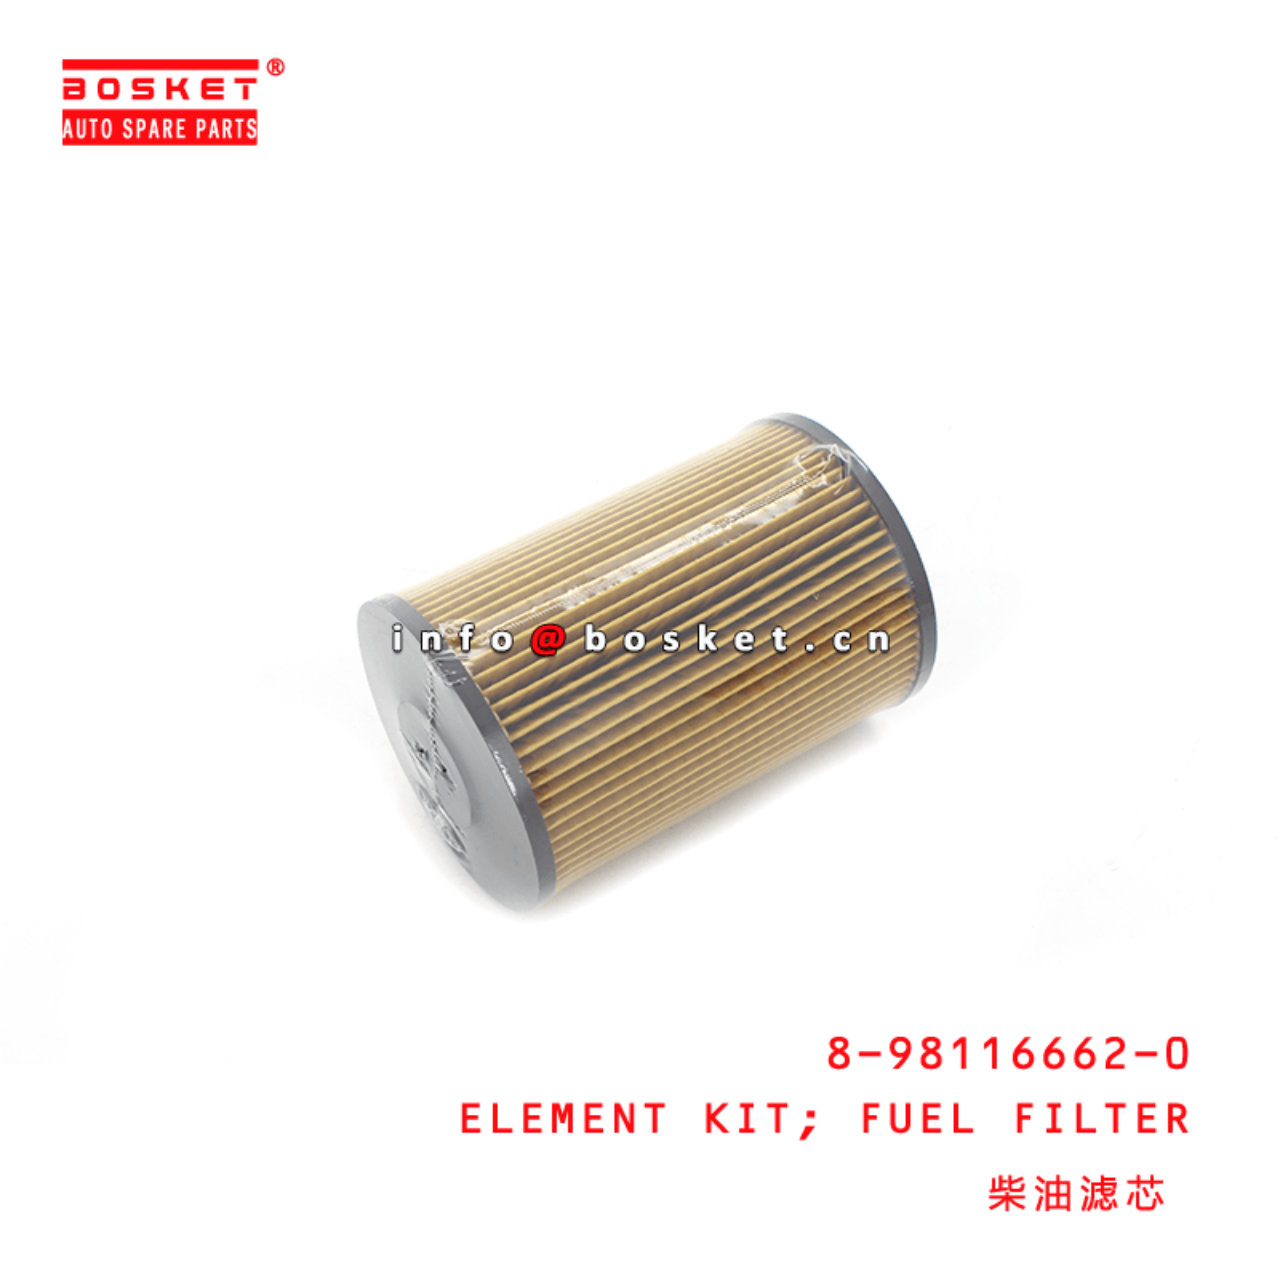 8-98116662-0 Fuel Filter Element Kit 8981166620 Suitable for ISUZU 6WG1